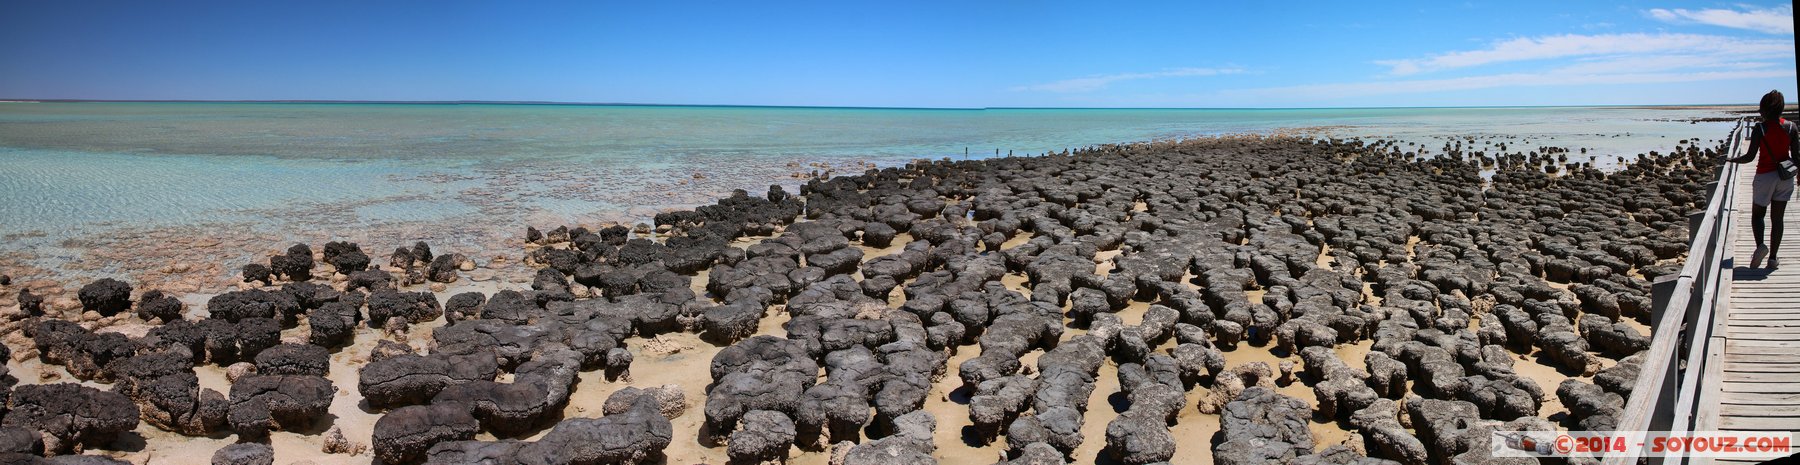 Shark Bay - Hamelin Pool - Stromatolites
Stitched Panorama
Mots-clés: AUS Australie geo:lat=-26.40032367 geo:lon=114.15893000 geotagged Gladstone State of Western Australia Western Australia Shark Bay patrimoine unesco Hamelin Pool Stromatolites mer